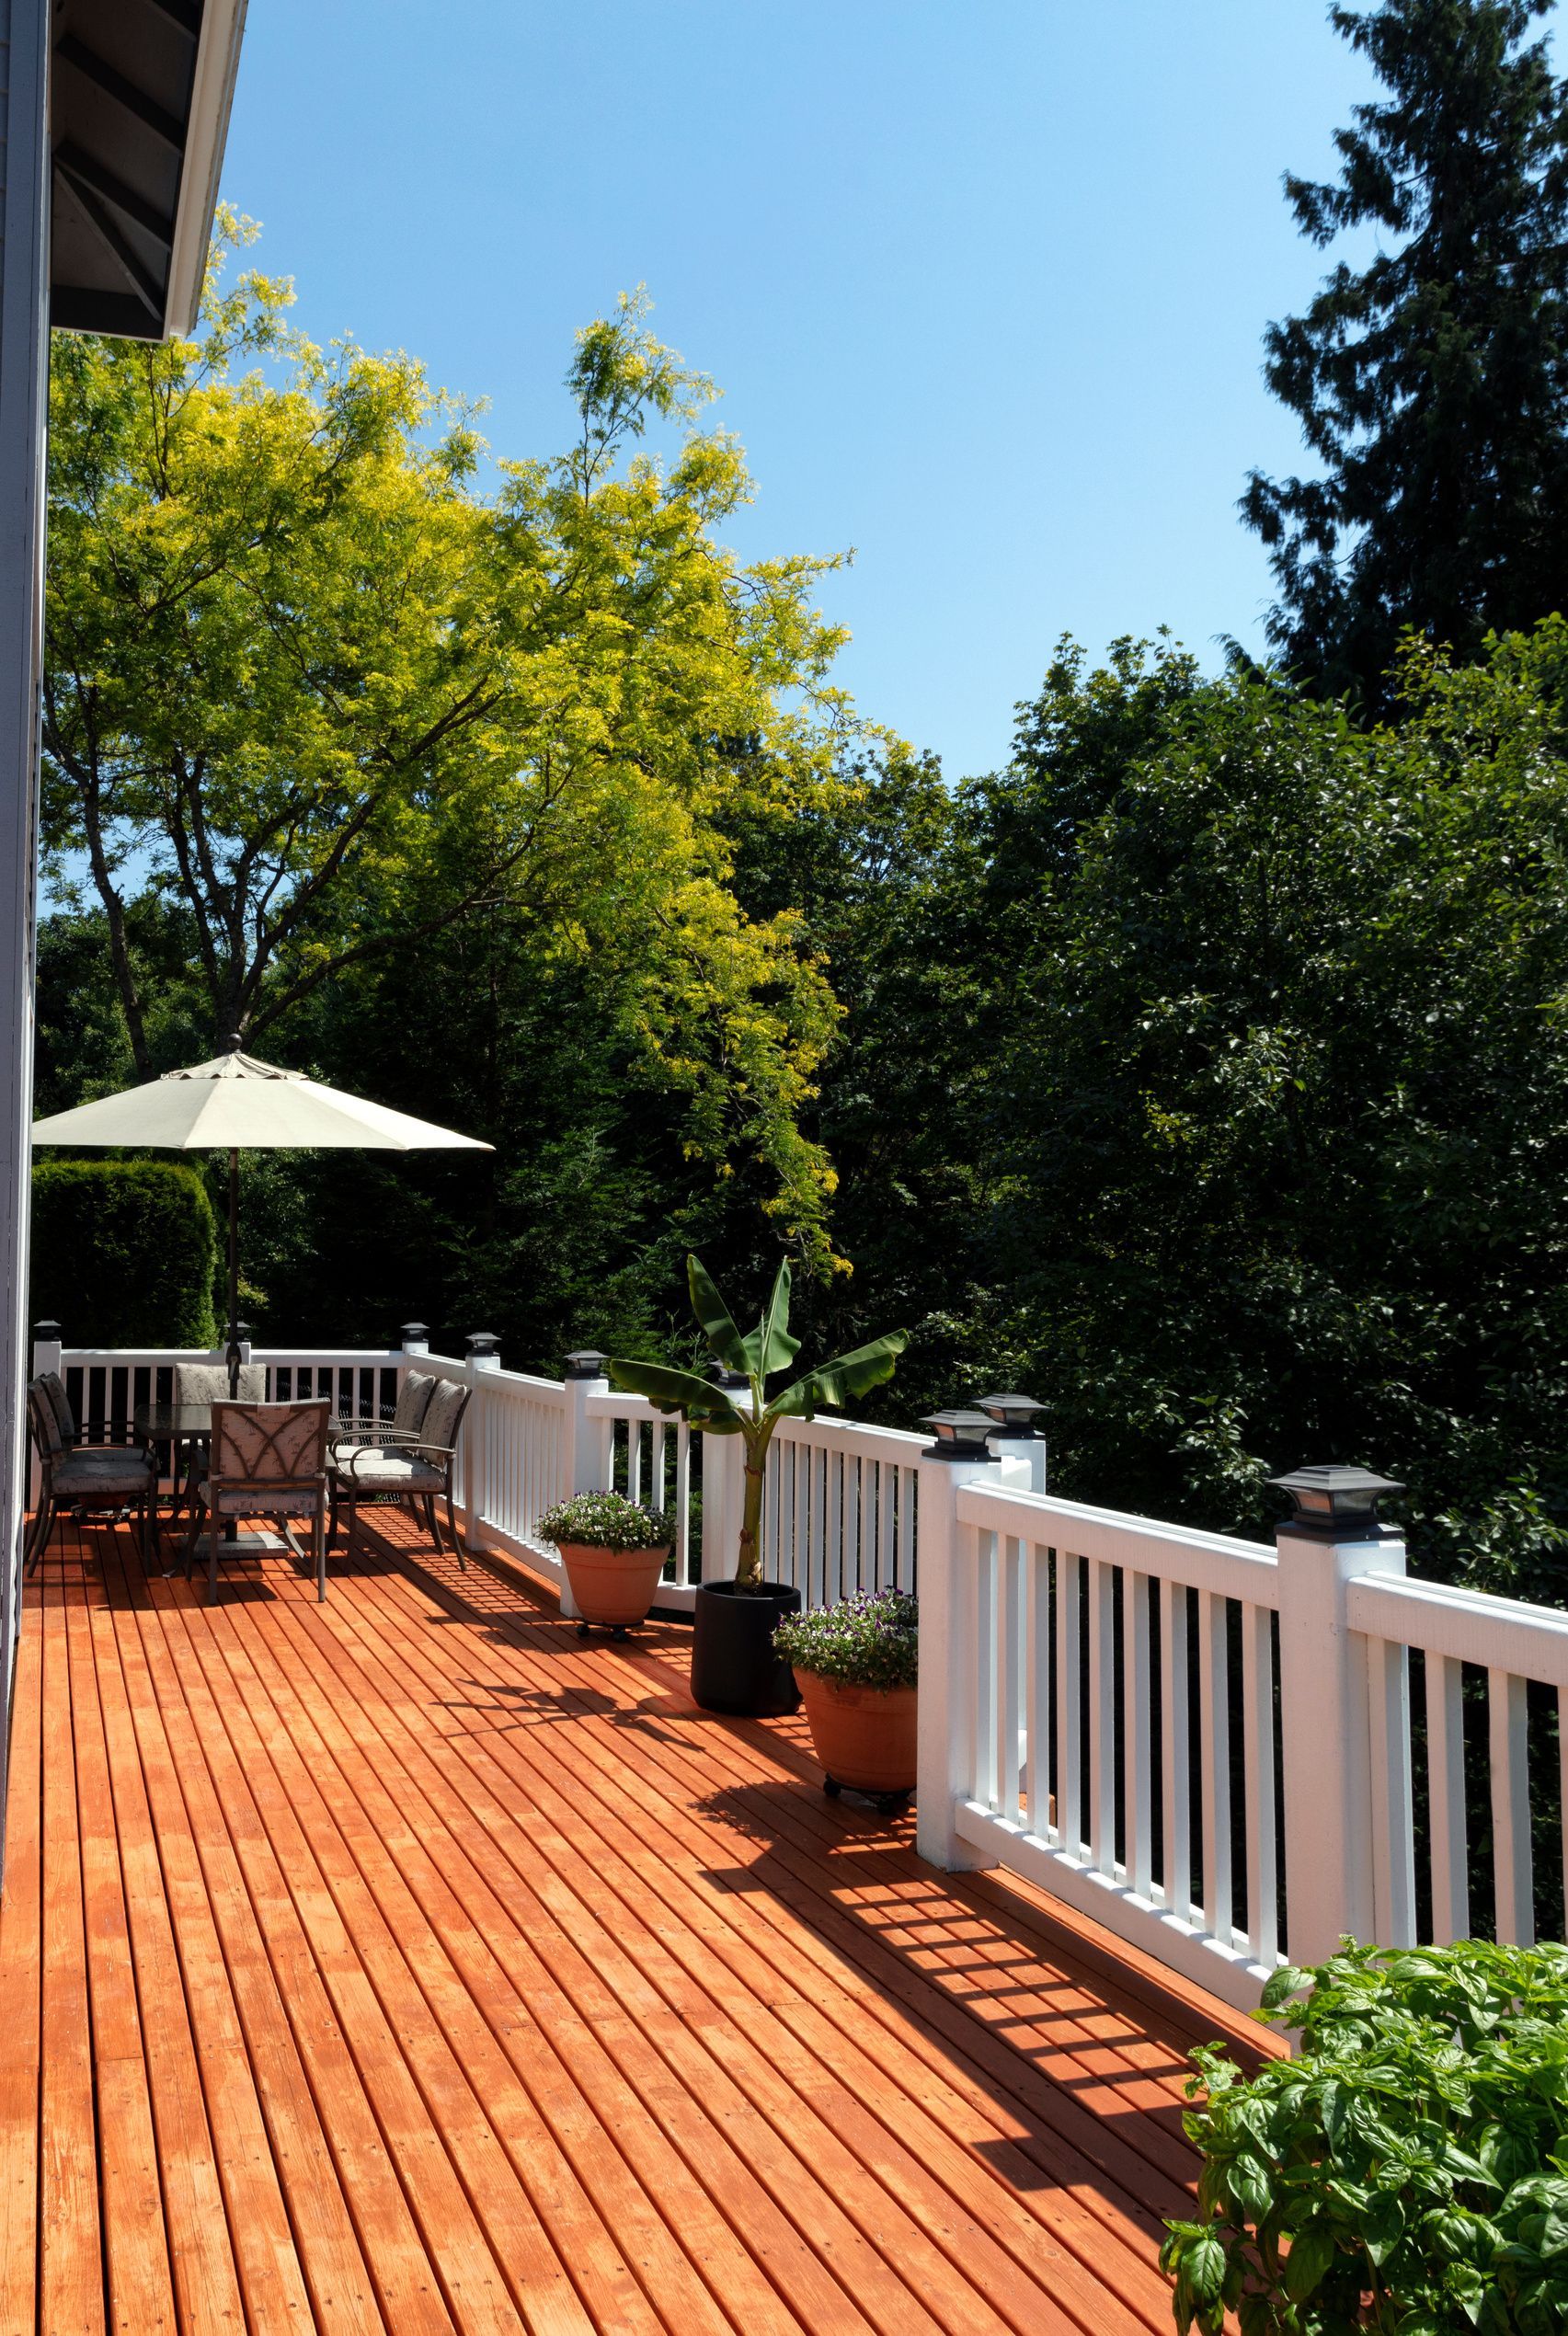 Terrasse en bois avec vue sur jardin